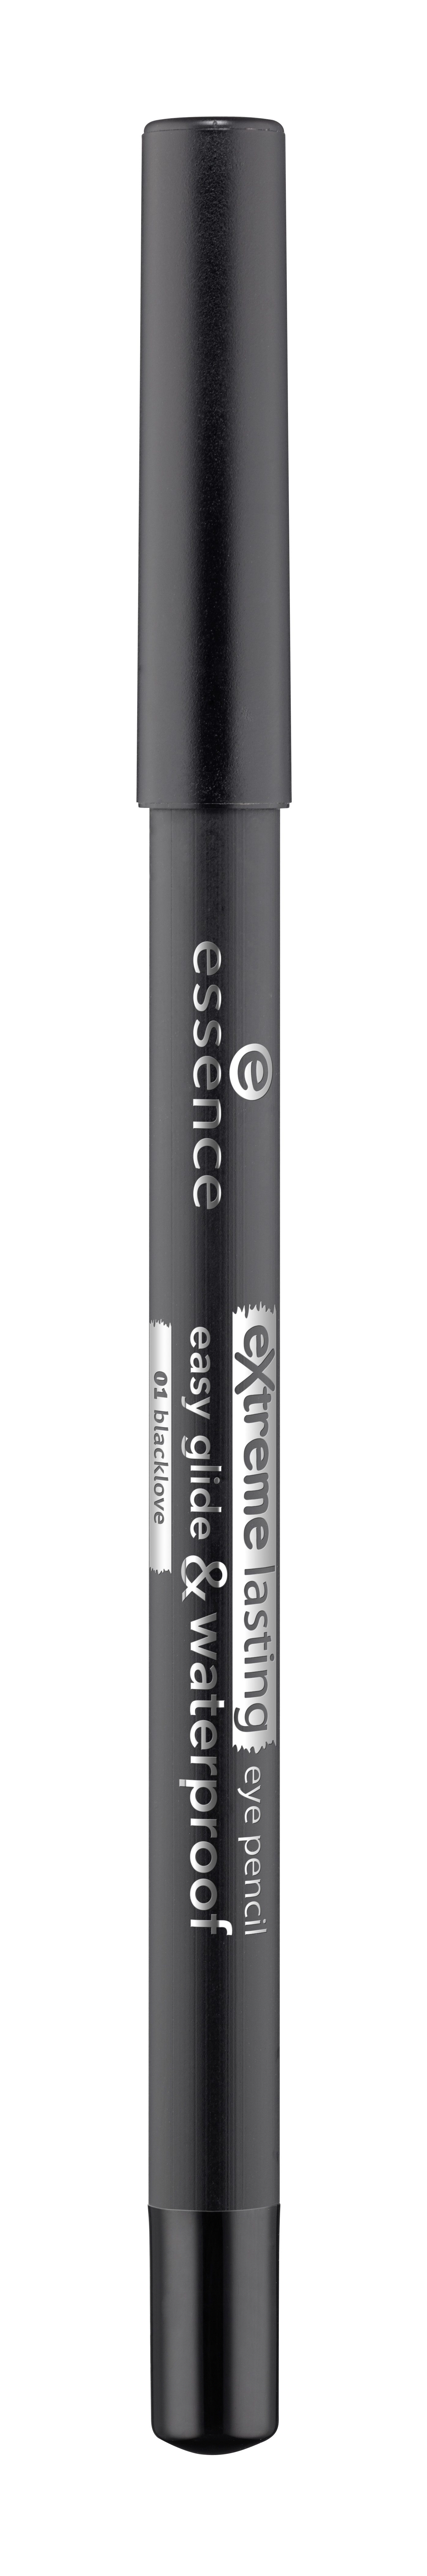 Essence Extreme Lasting Eye Pencil